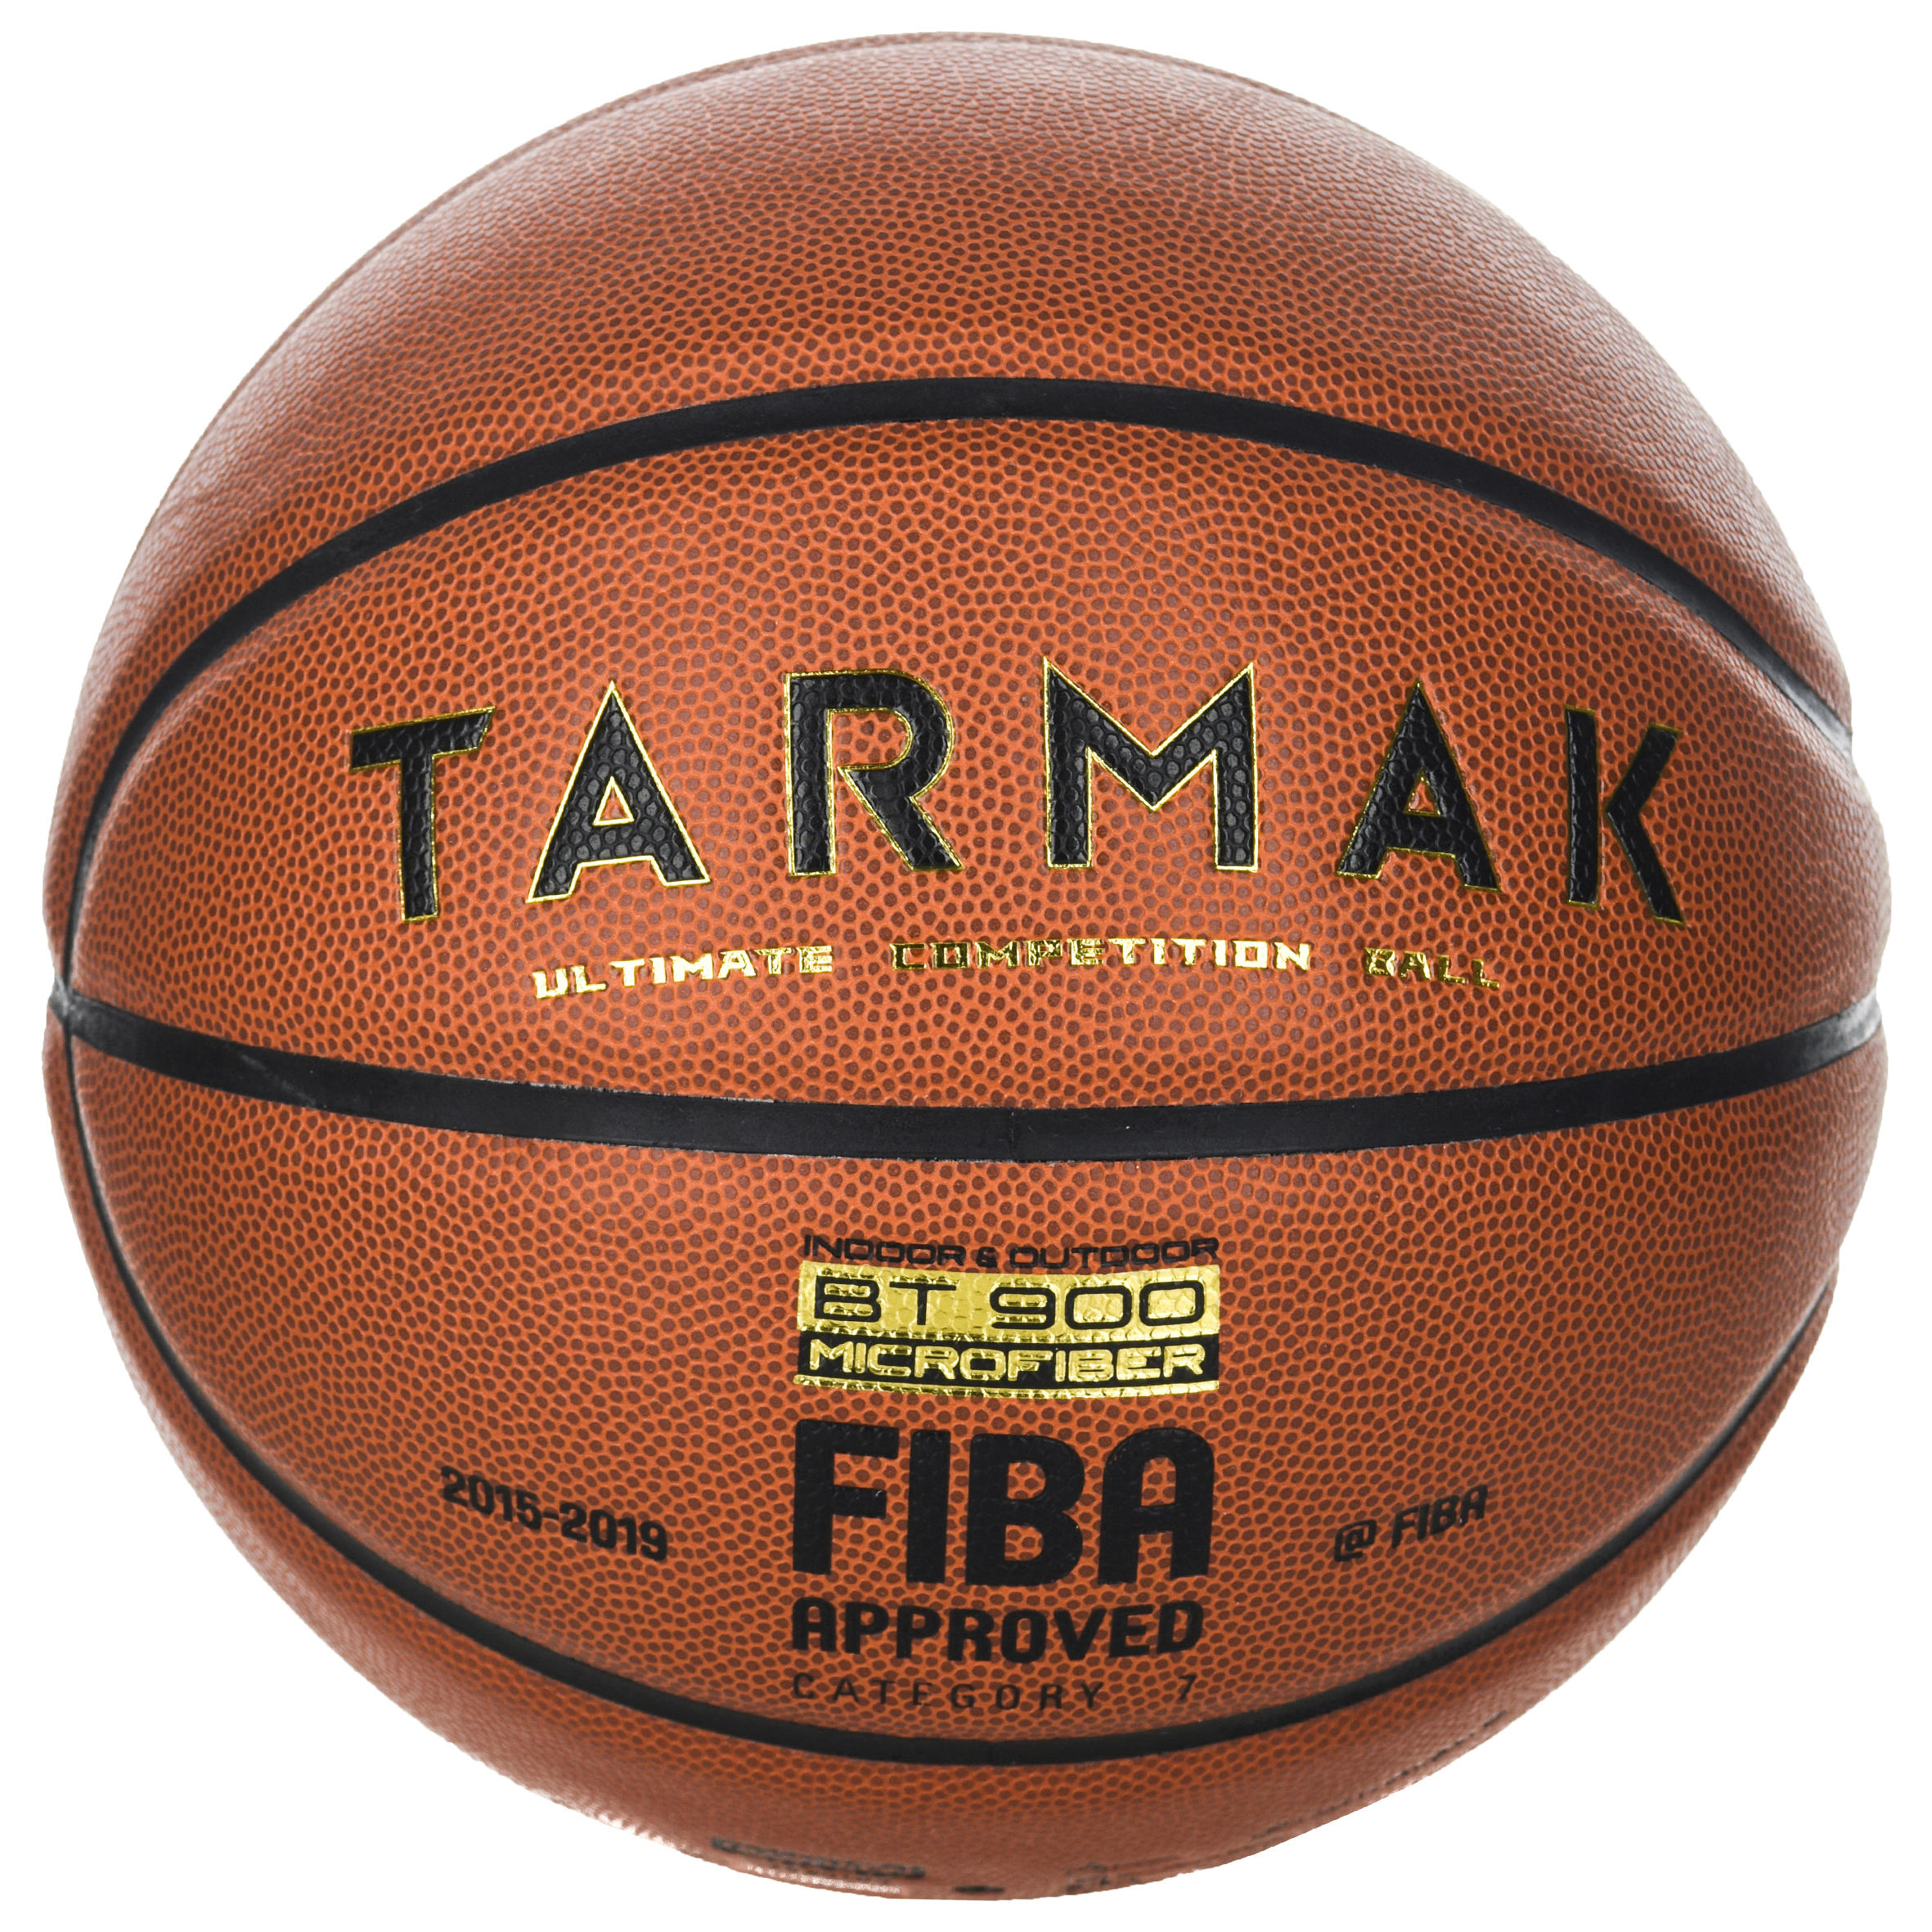 BT900 Size 7 BasketballFIBA-approved 